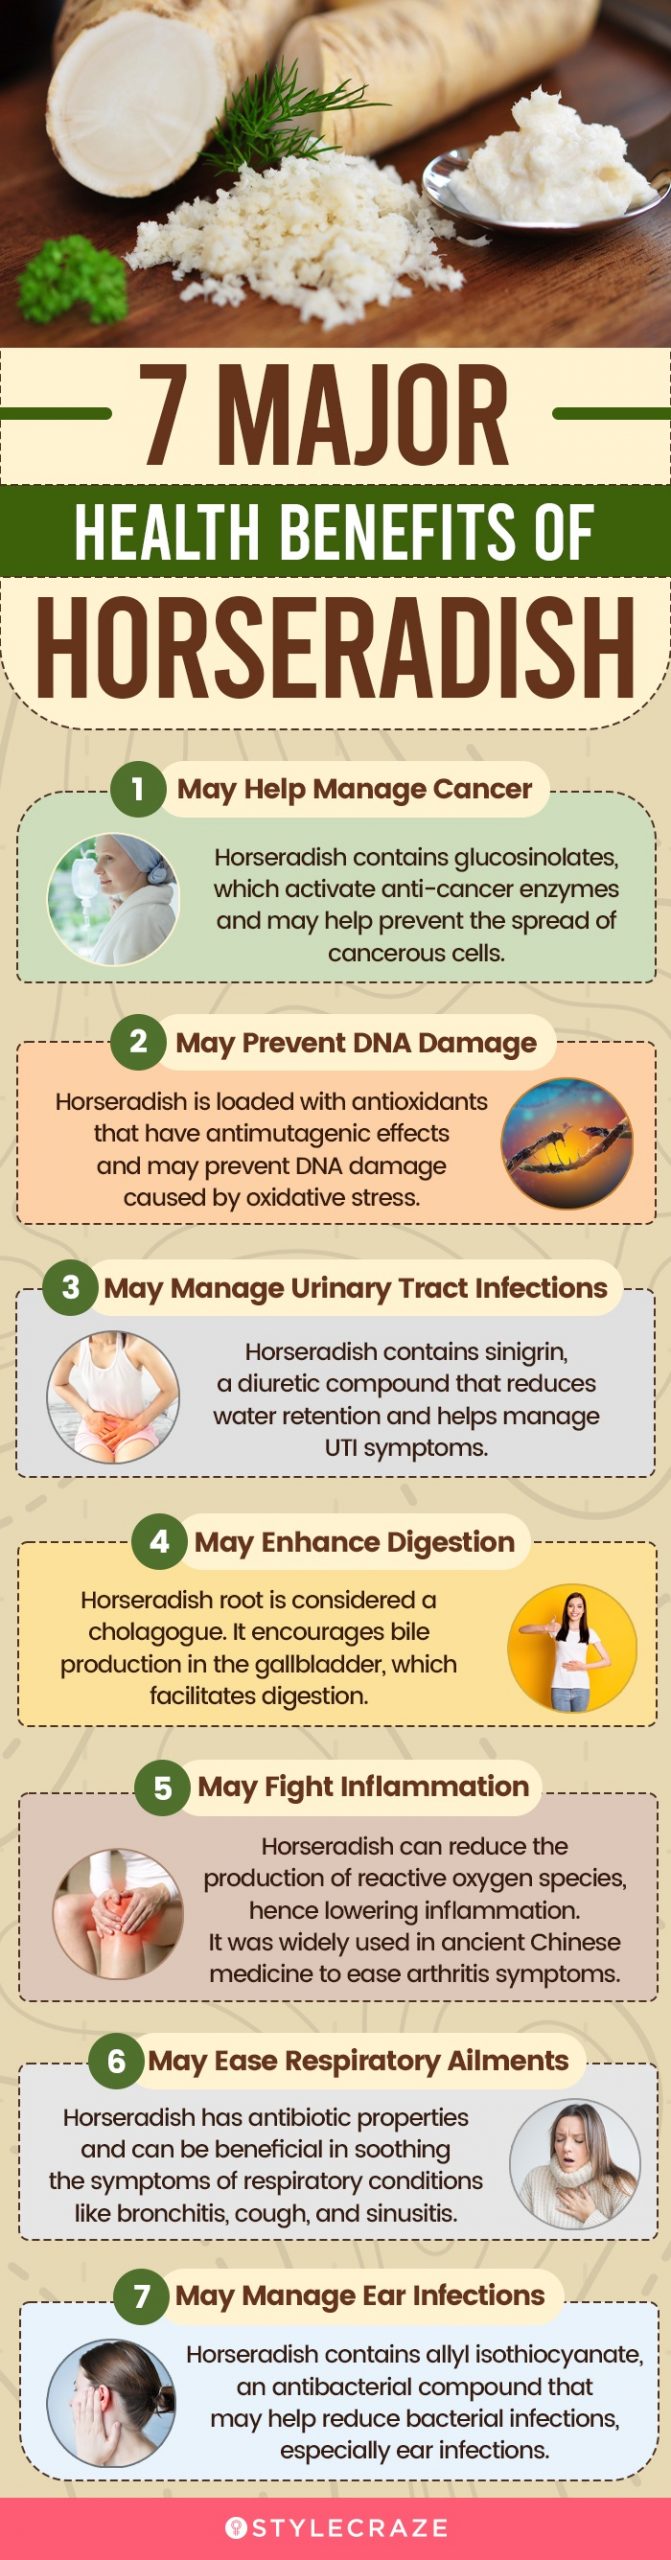 7 major health benefits of horseradish (infographic)